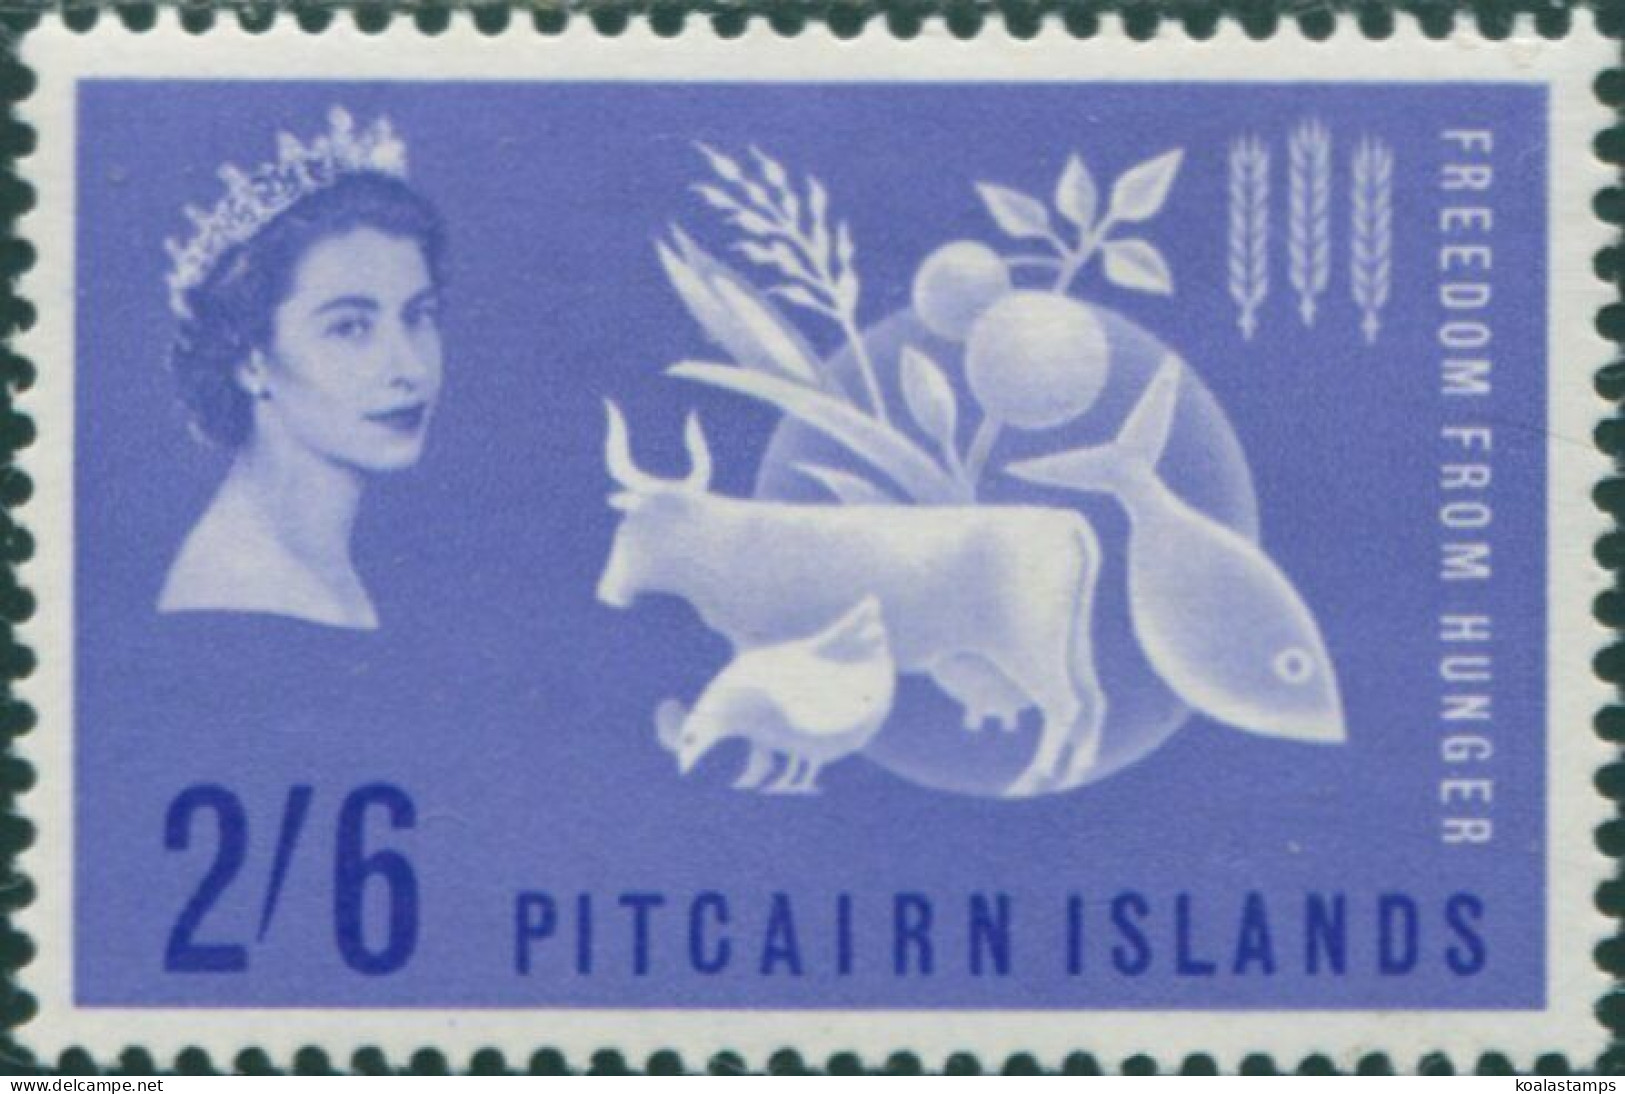 Pitcairn Islands 1963 SG32 2/6d Freedom From Hunger MNH - Pitcairn